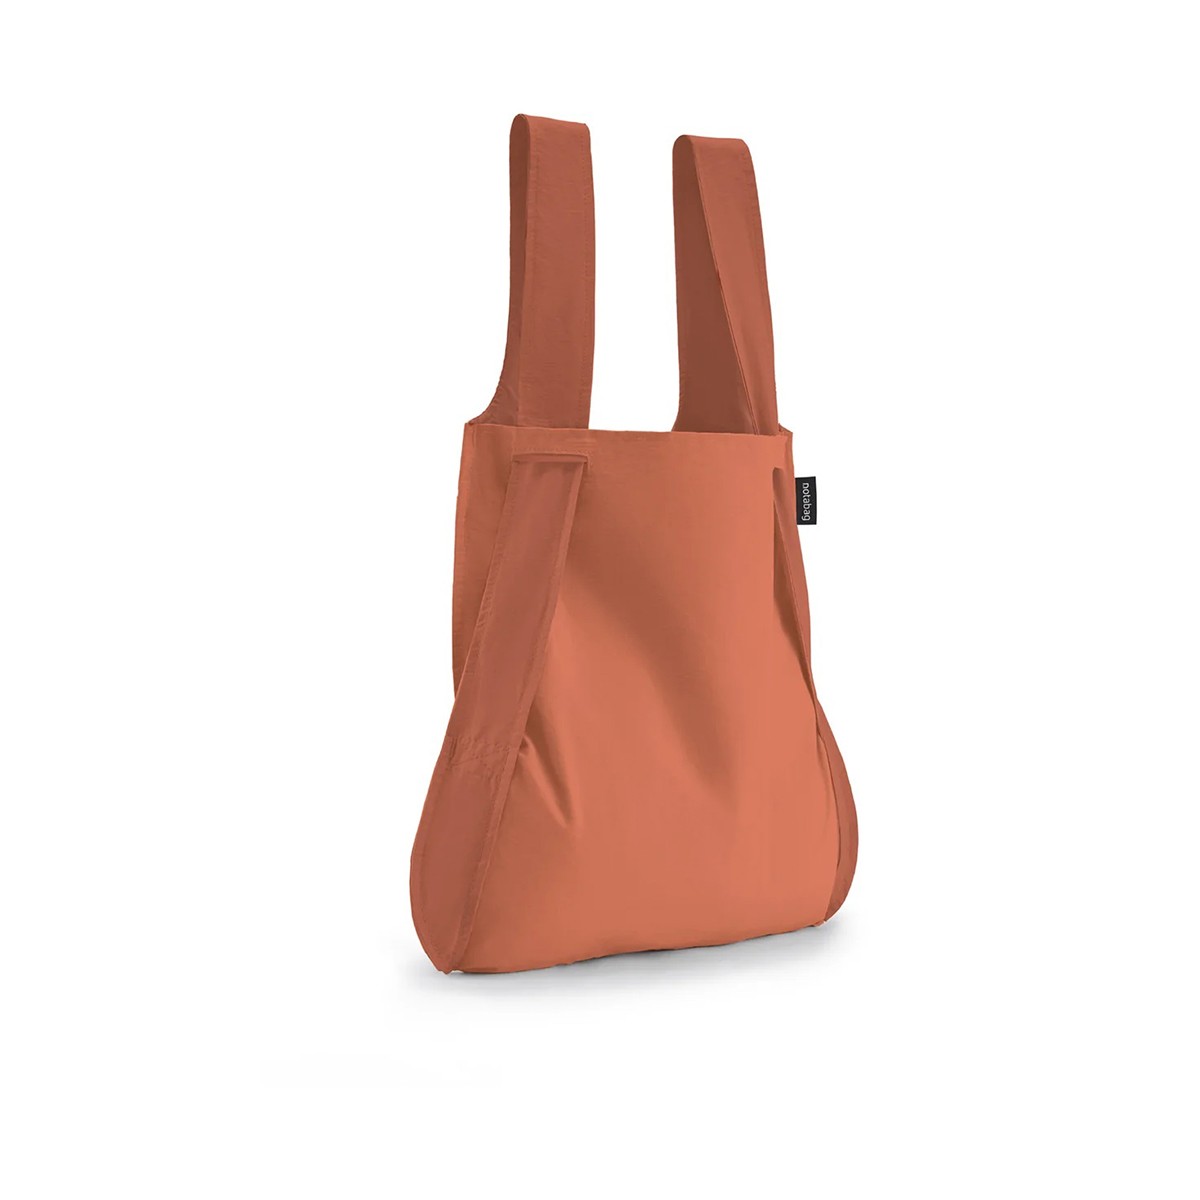 Shopping bag - Notabag Terracotta